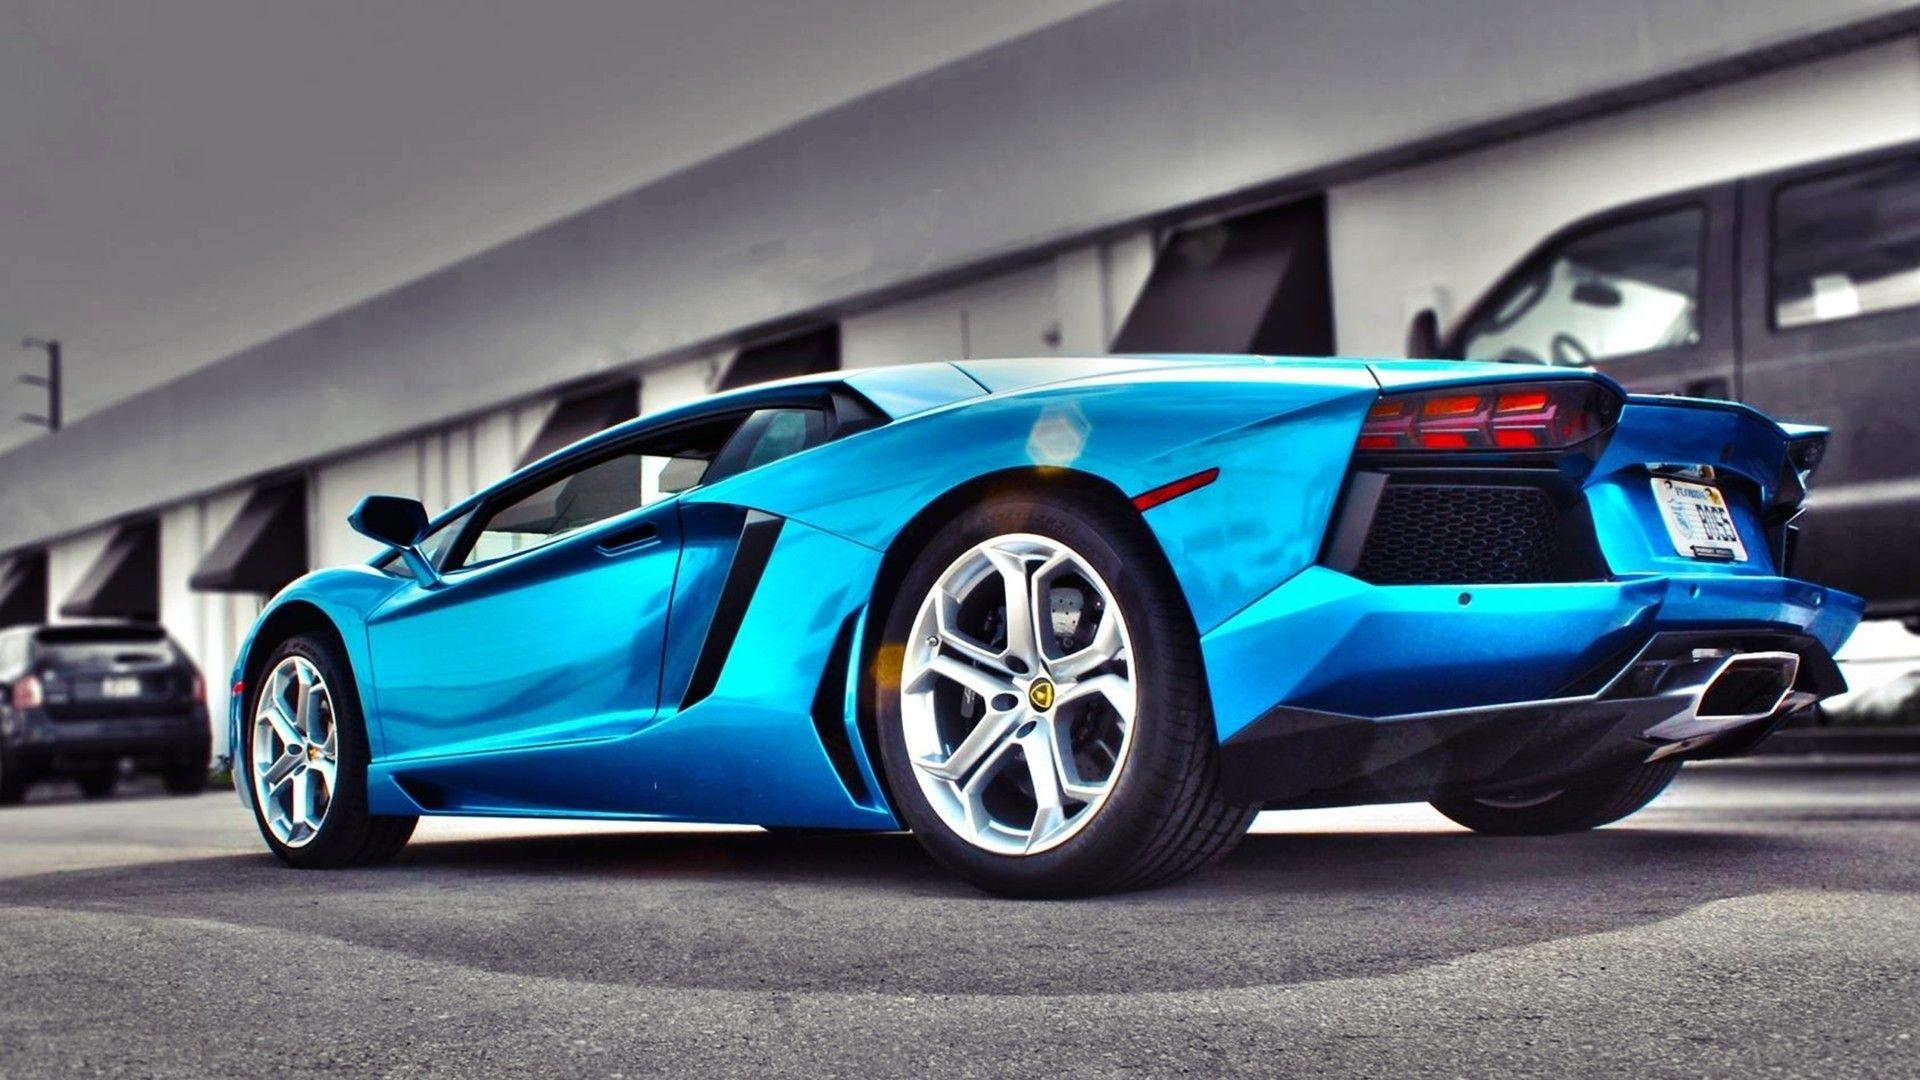 Blue Lamborghini Wallpaper Desktop. Vehicles Wallpaper